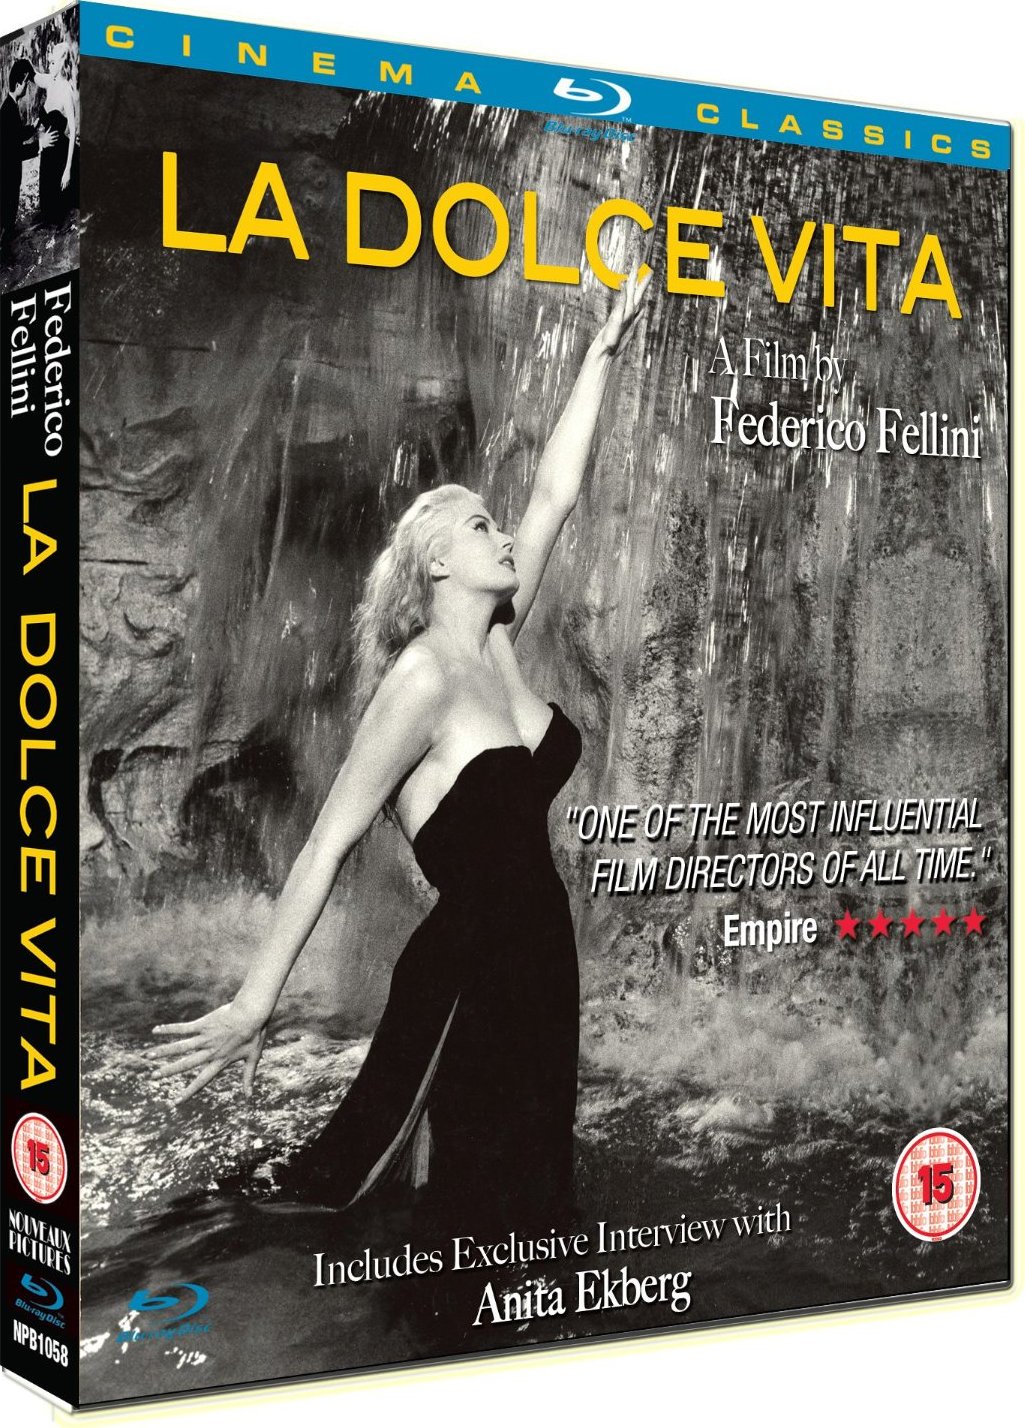 La Dolce Vita UK Blu-ray Release Detailed